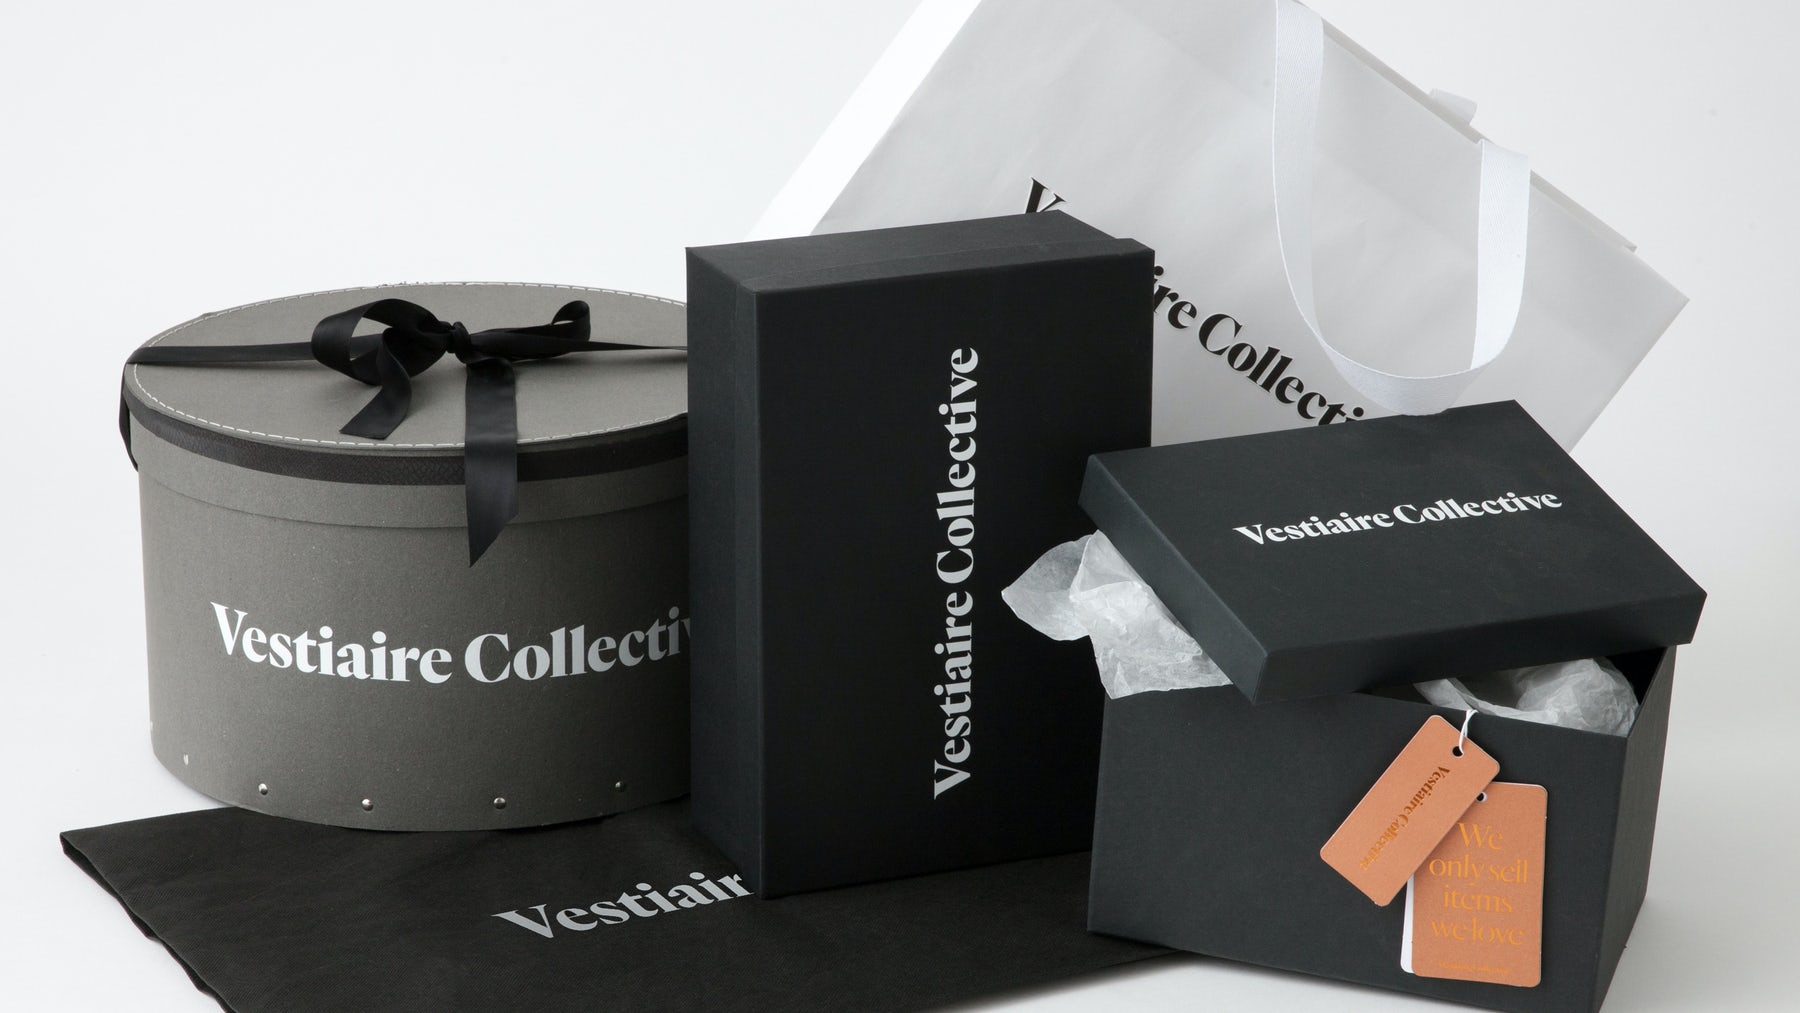 Come collection. Vestiaire. Luxury resale platform Vestiaire Collective is pioneering a Fashion Revolution. Vestiaire Collective все условия хранения.